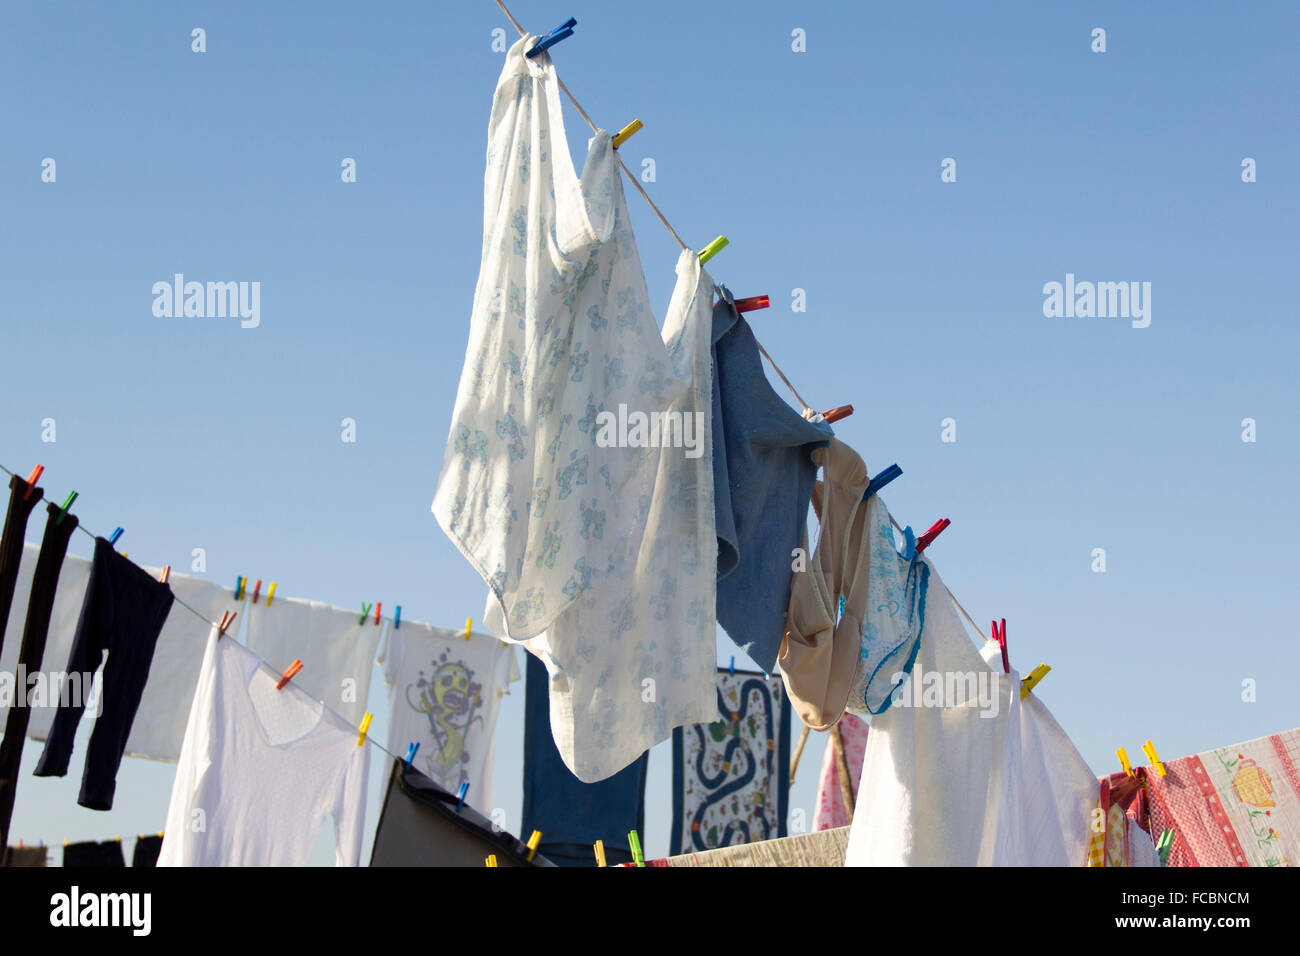 hanger, afurada, clothes sun, tradition, antique technique, rural method, drying Stock Photo